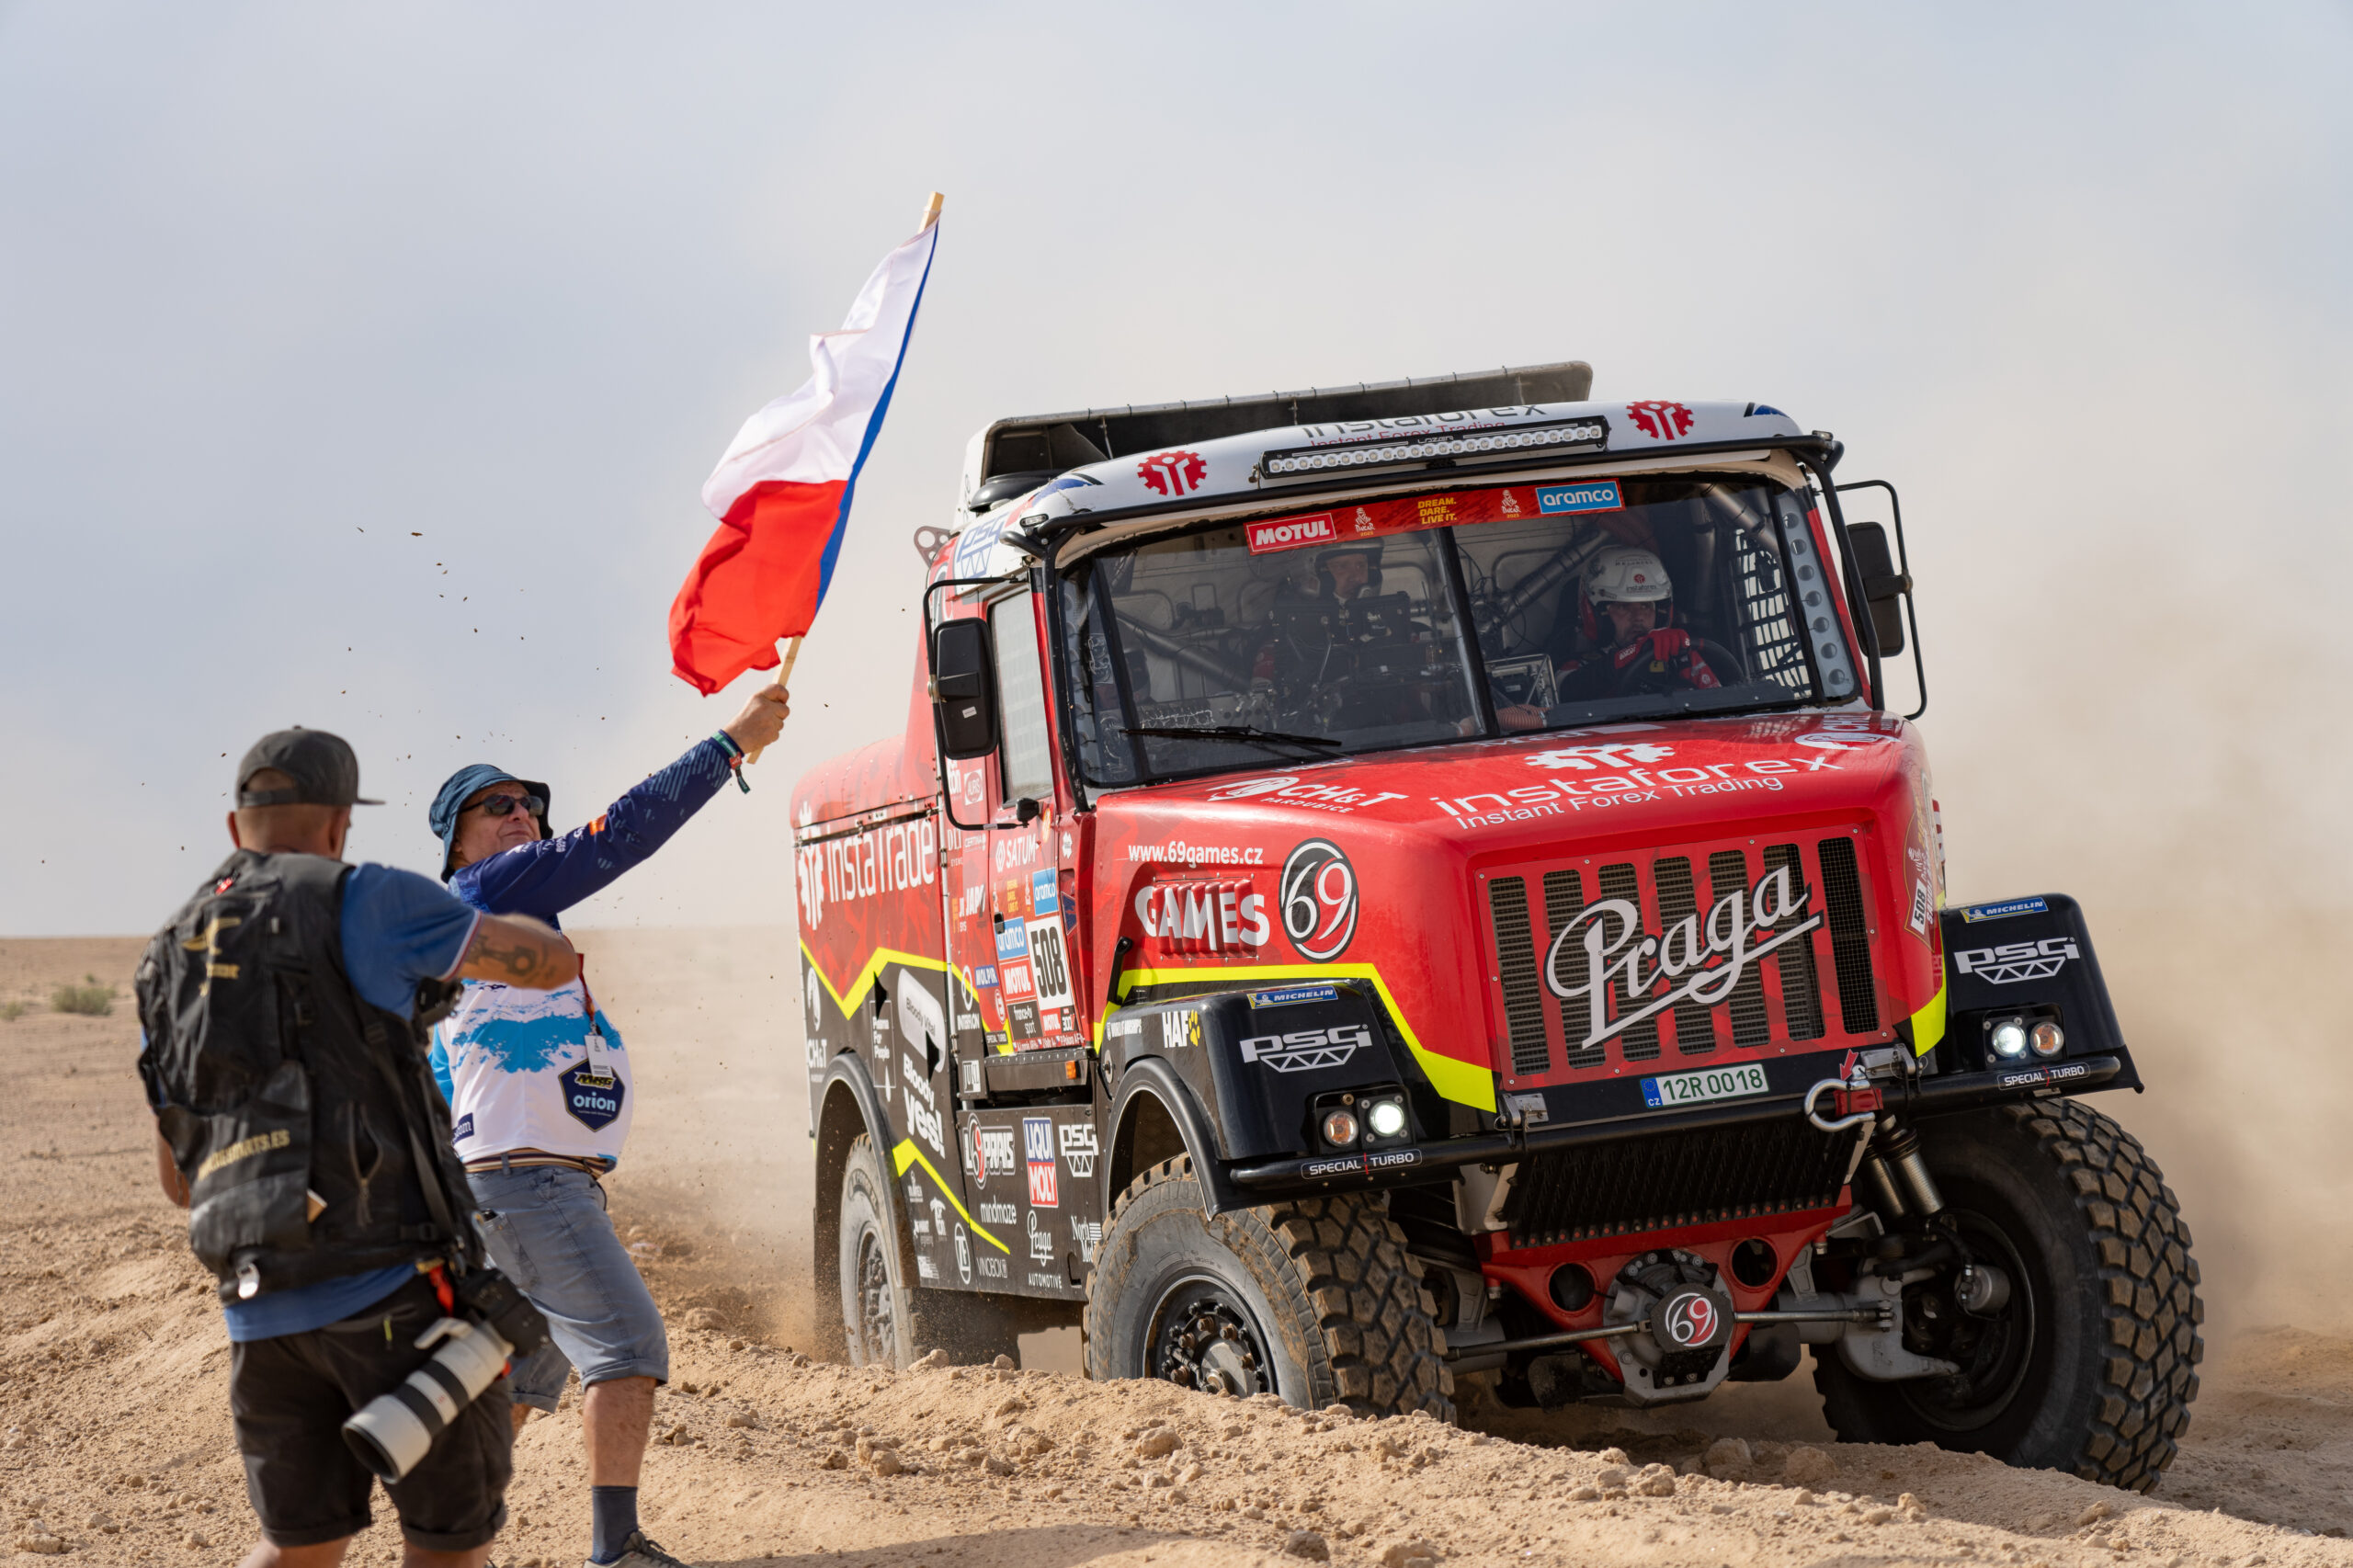 Dakar 2023: Aleš Loprais takes the lead after Stage 2 victory